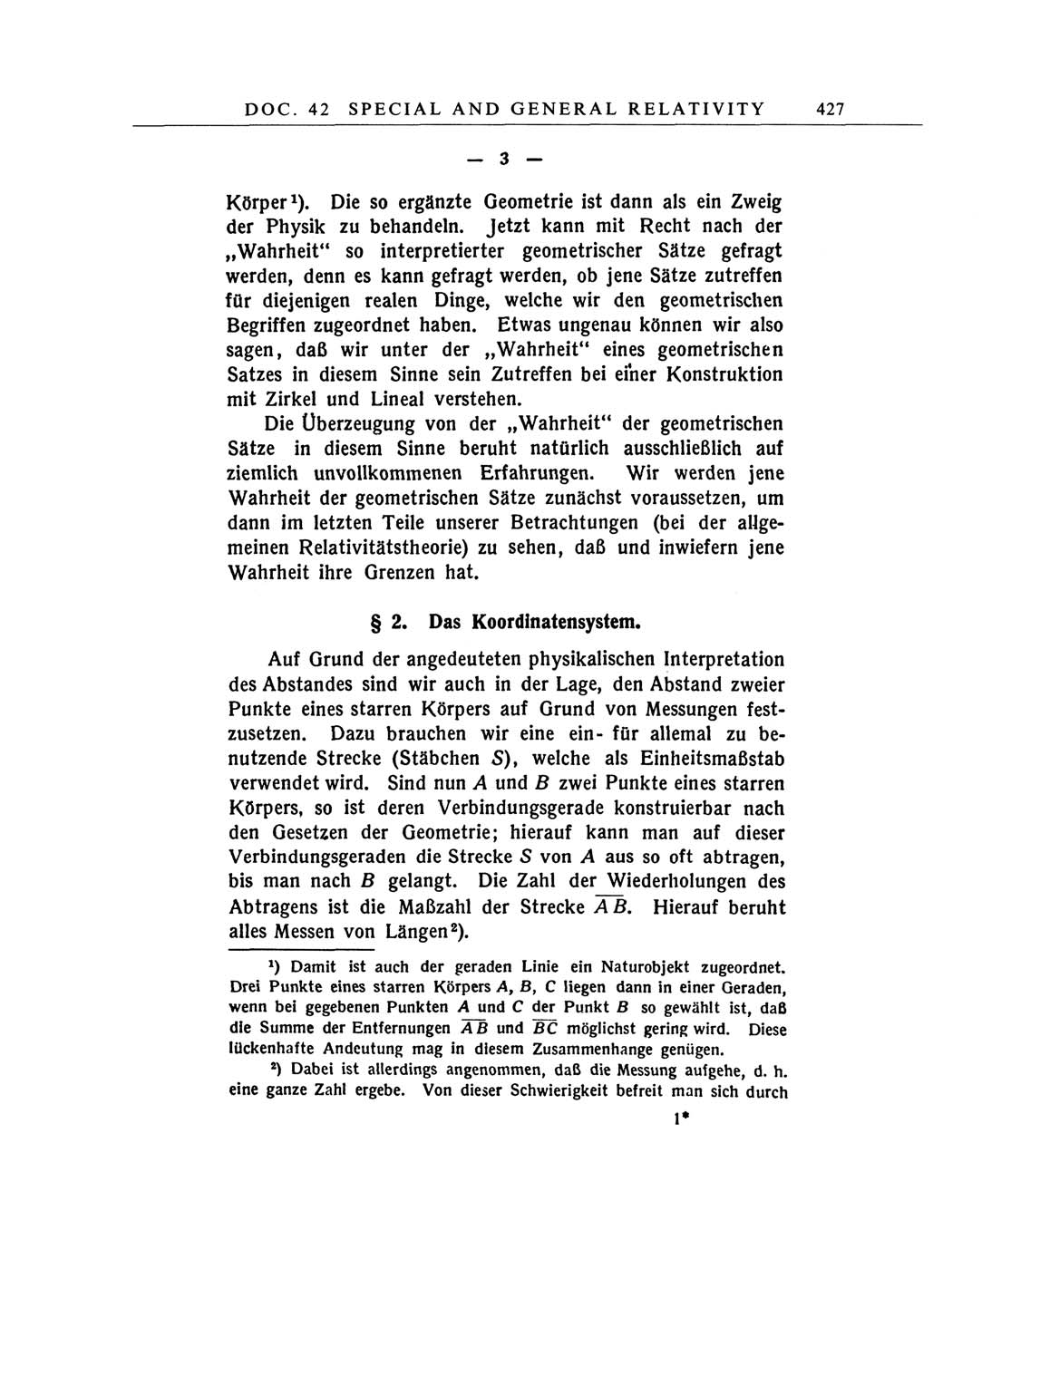 Volume 6: The Berlin Years: Writings, 1914-1917 page 427